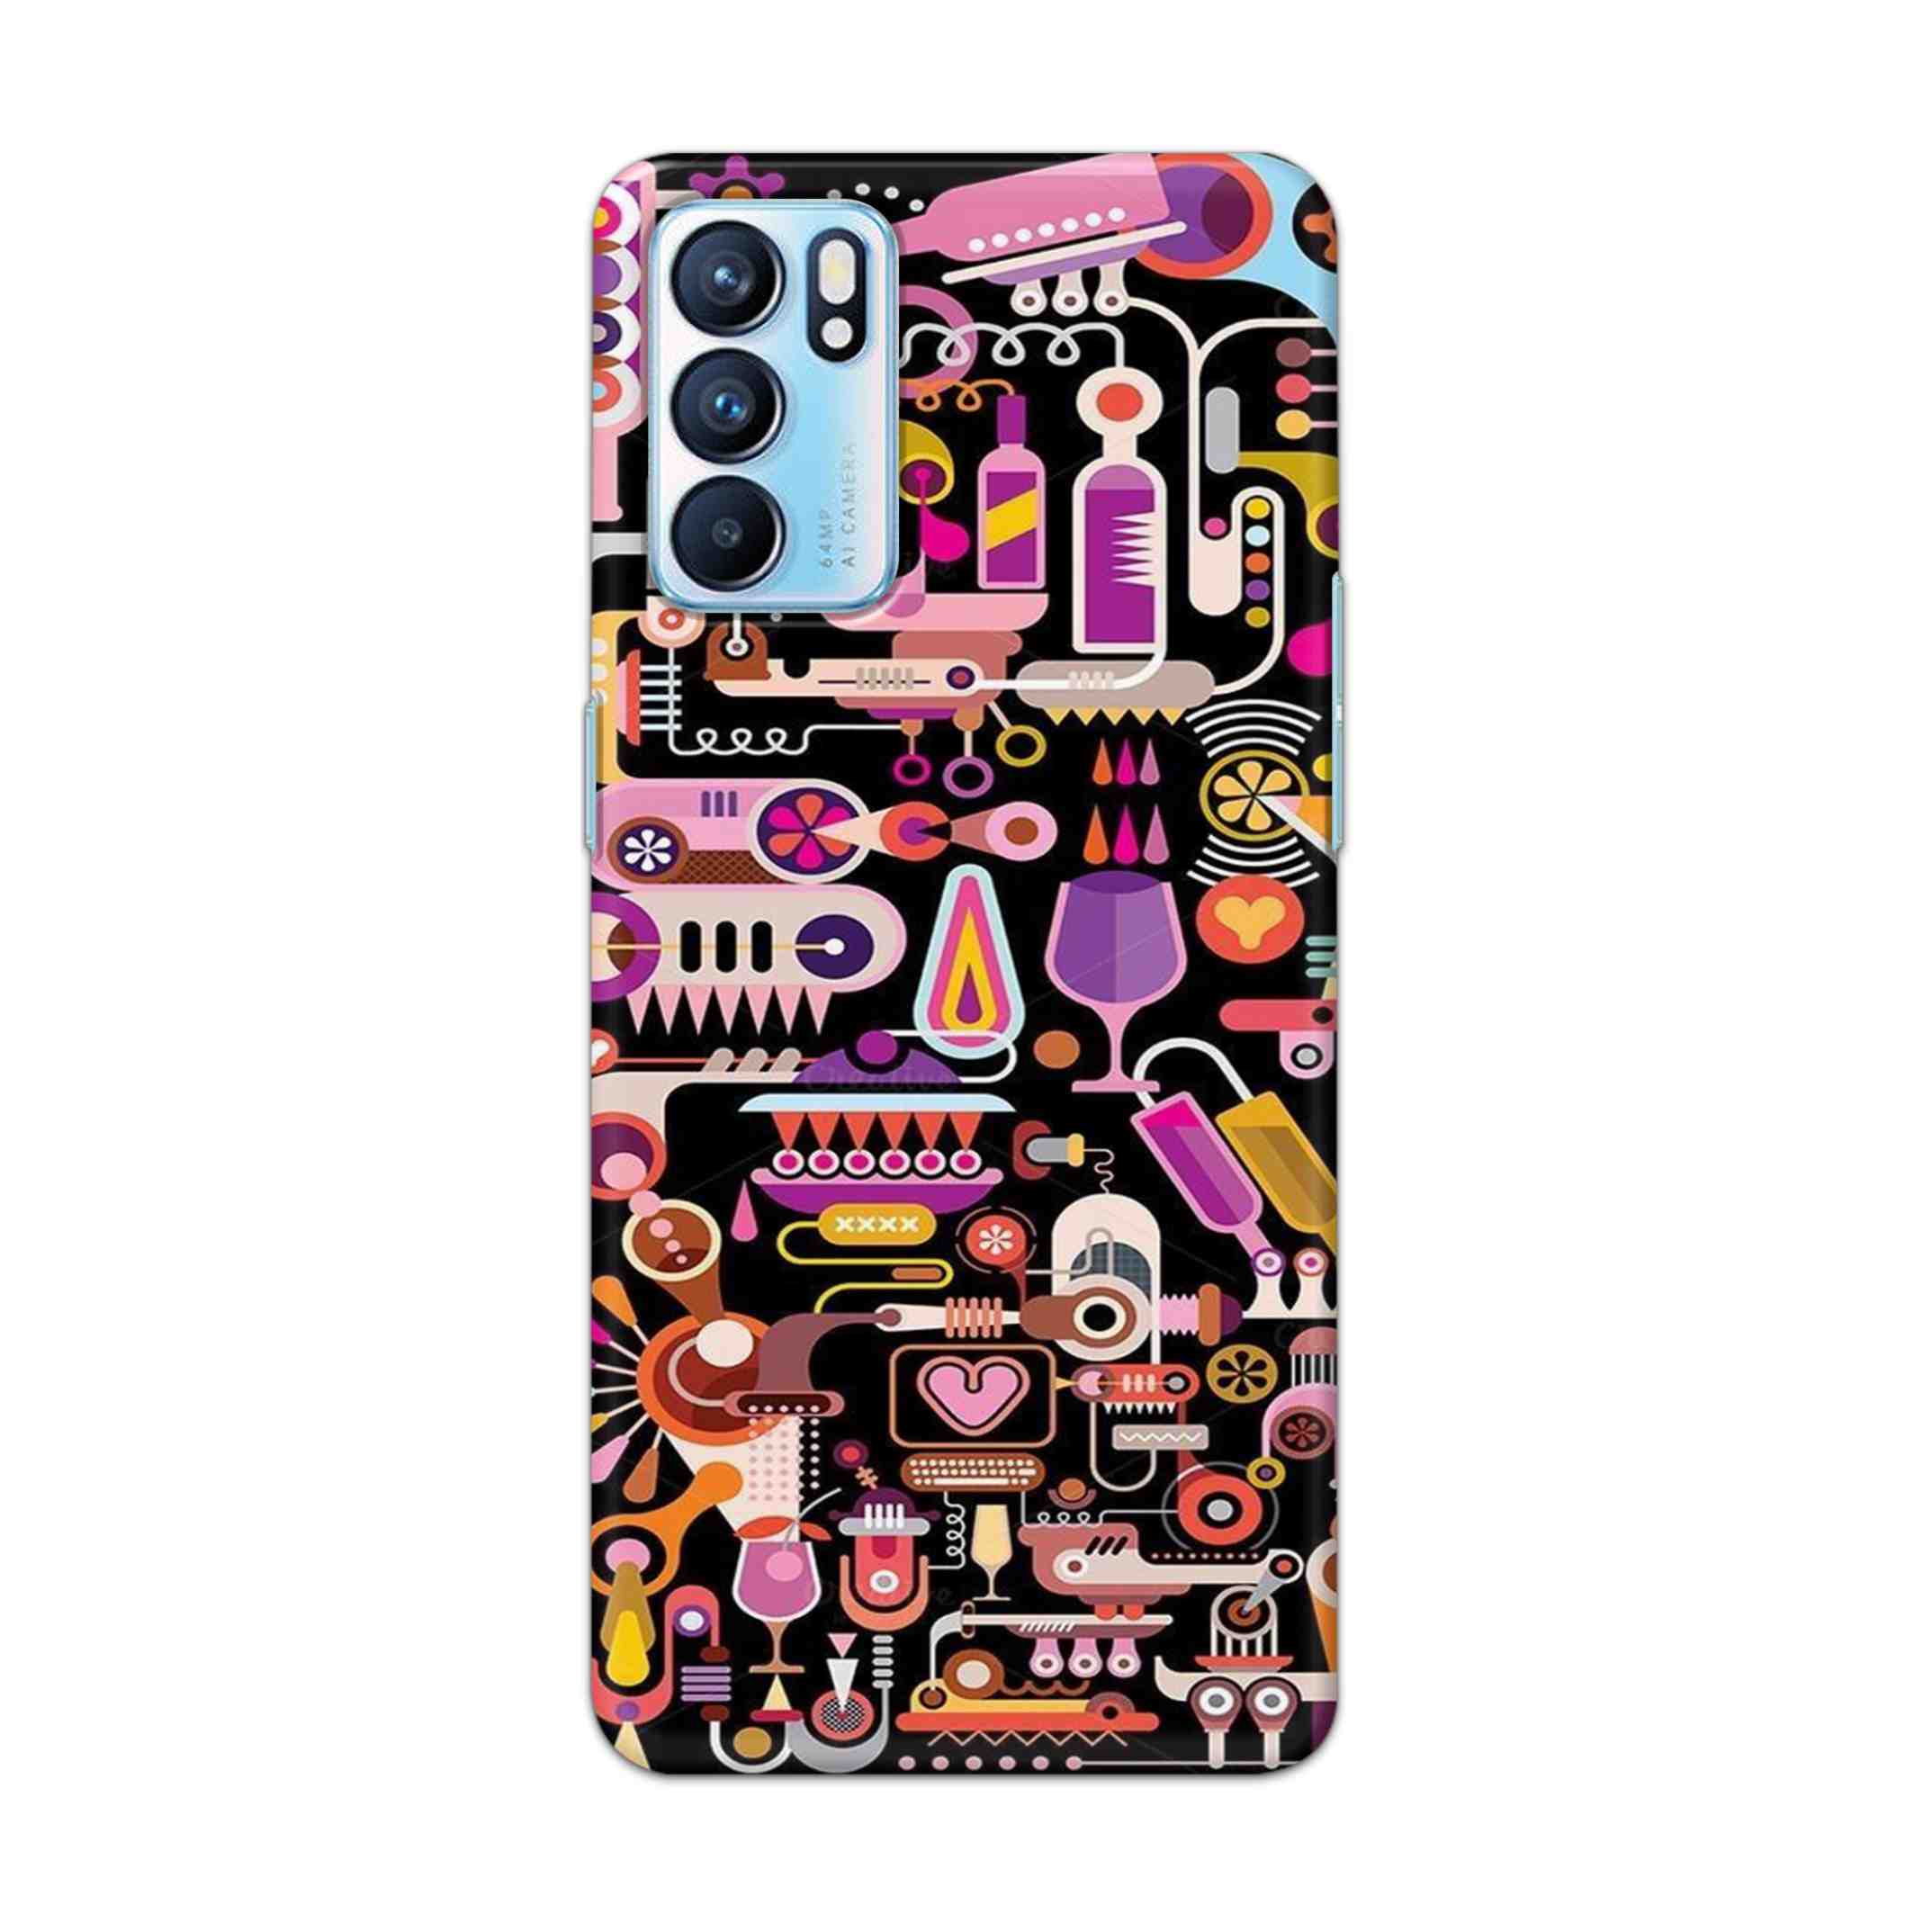 Buy Lab Art Hard Back Mobile Phone Case Cover For OPPO RENO 6 Online